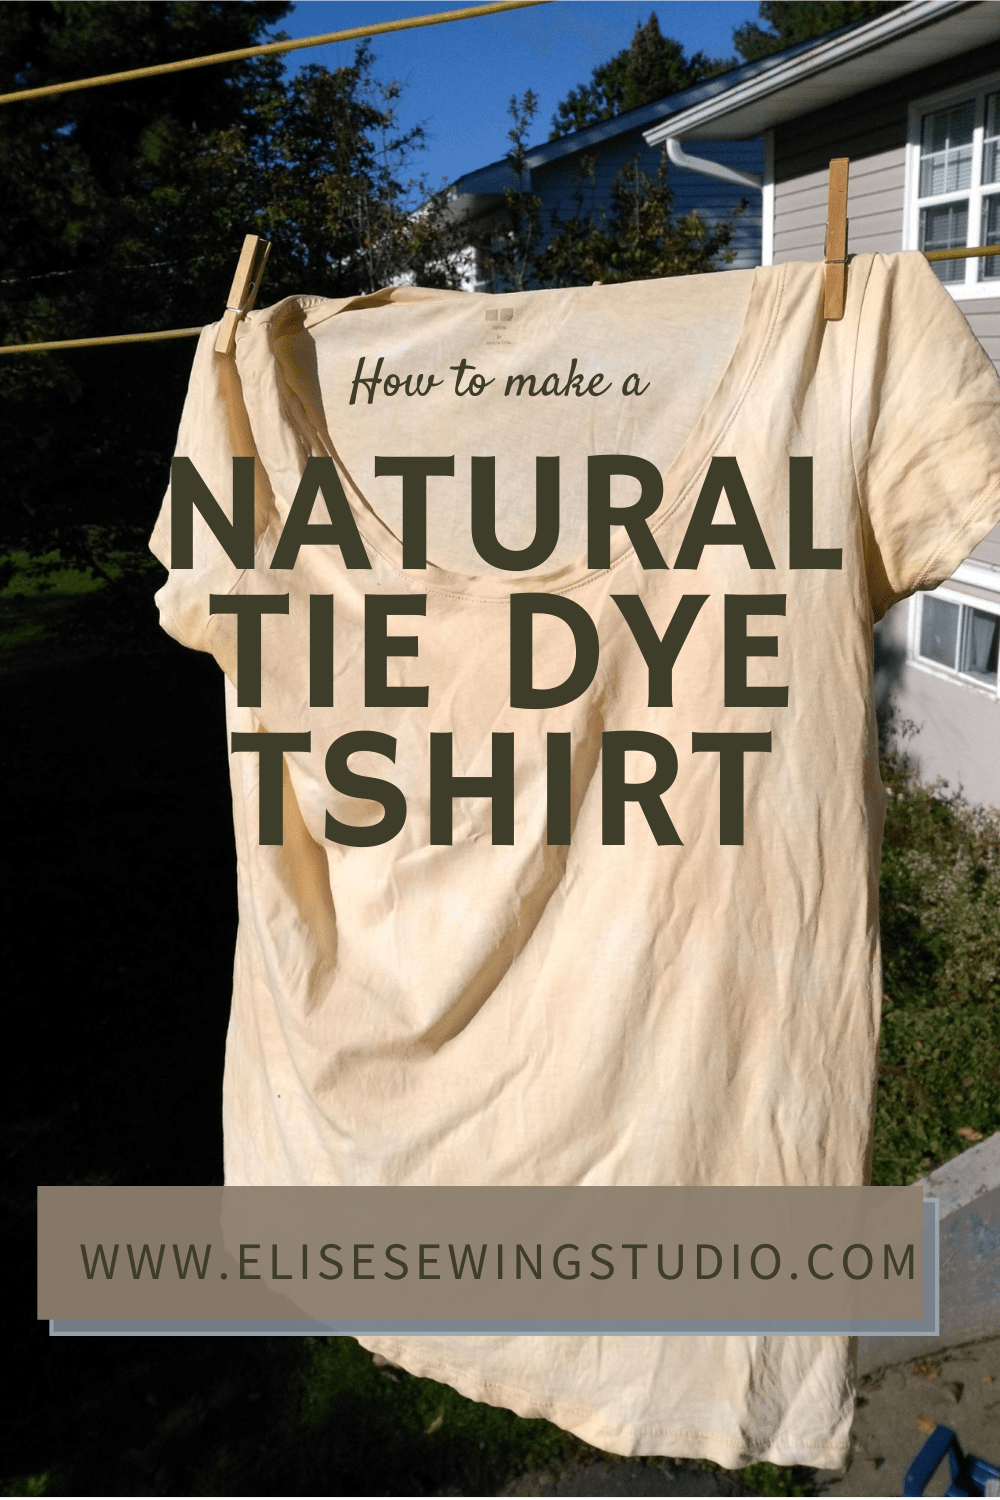 Natural Tie Dye Tshirt process